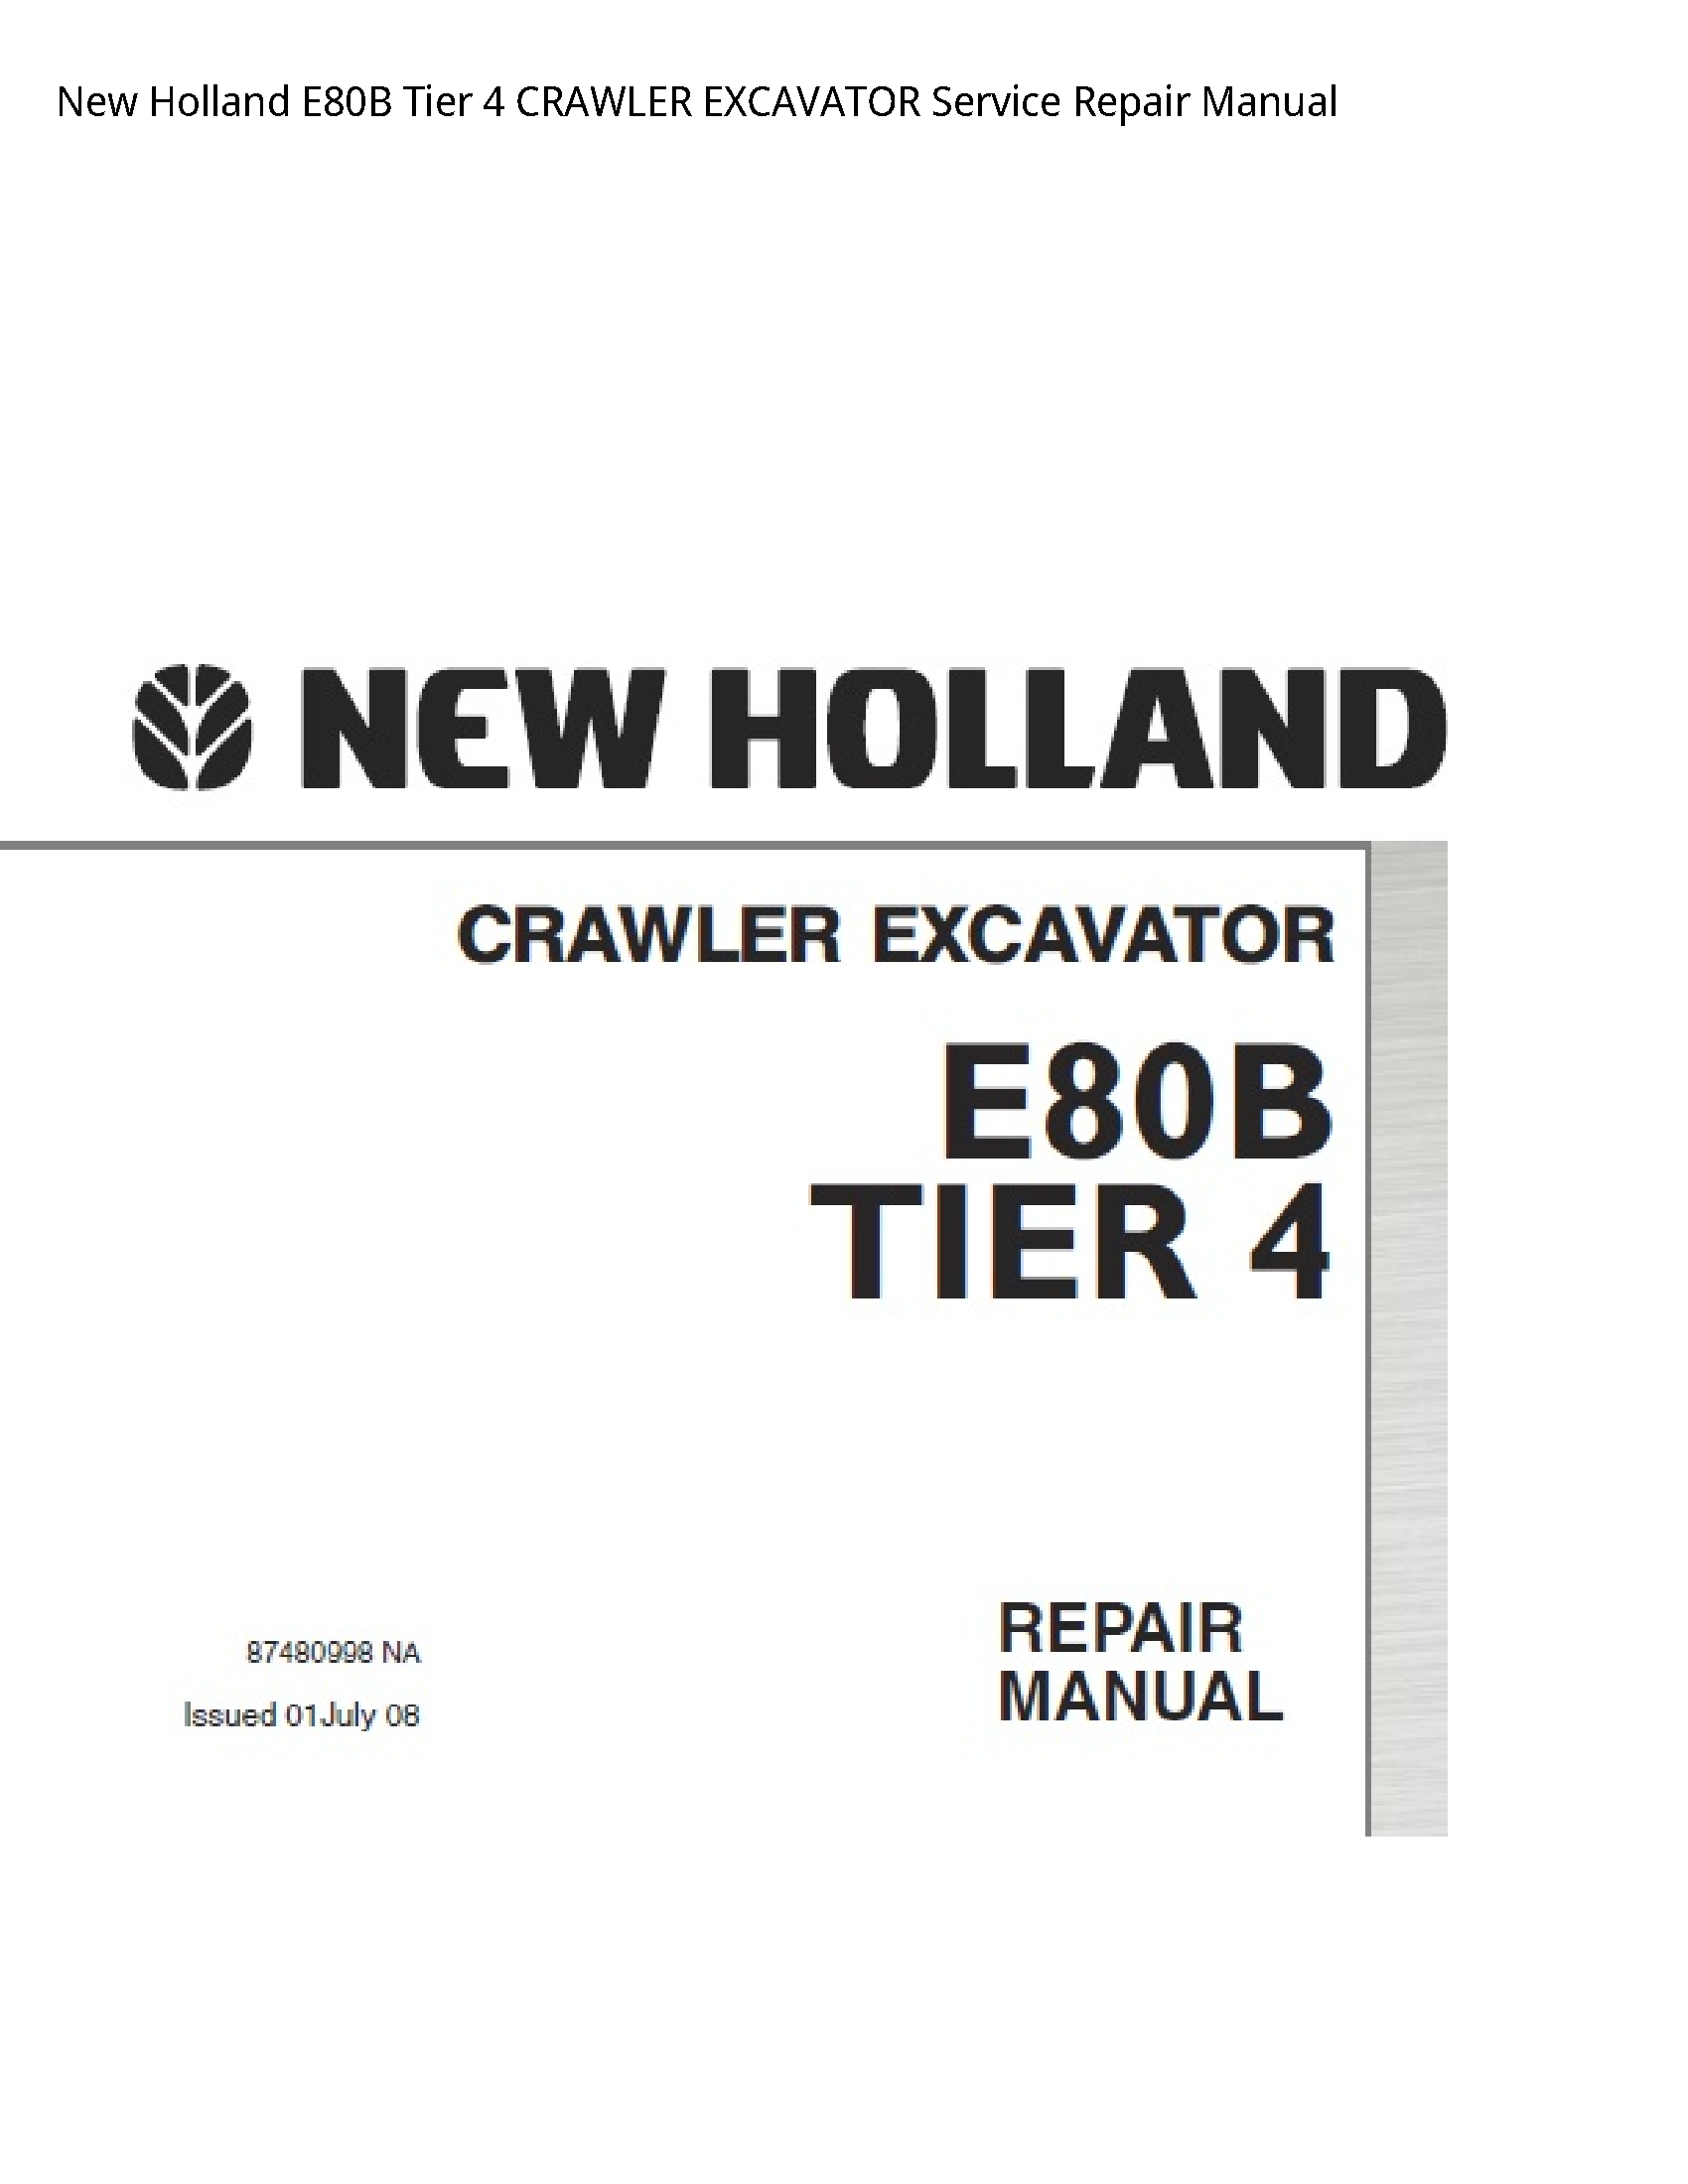 New Holland E80B Tier CRAWLER EXCAVATOR manual